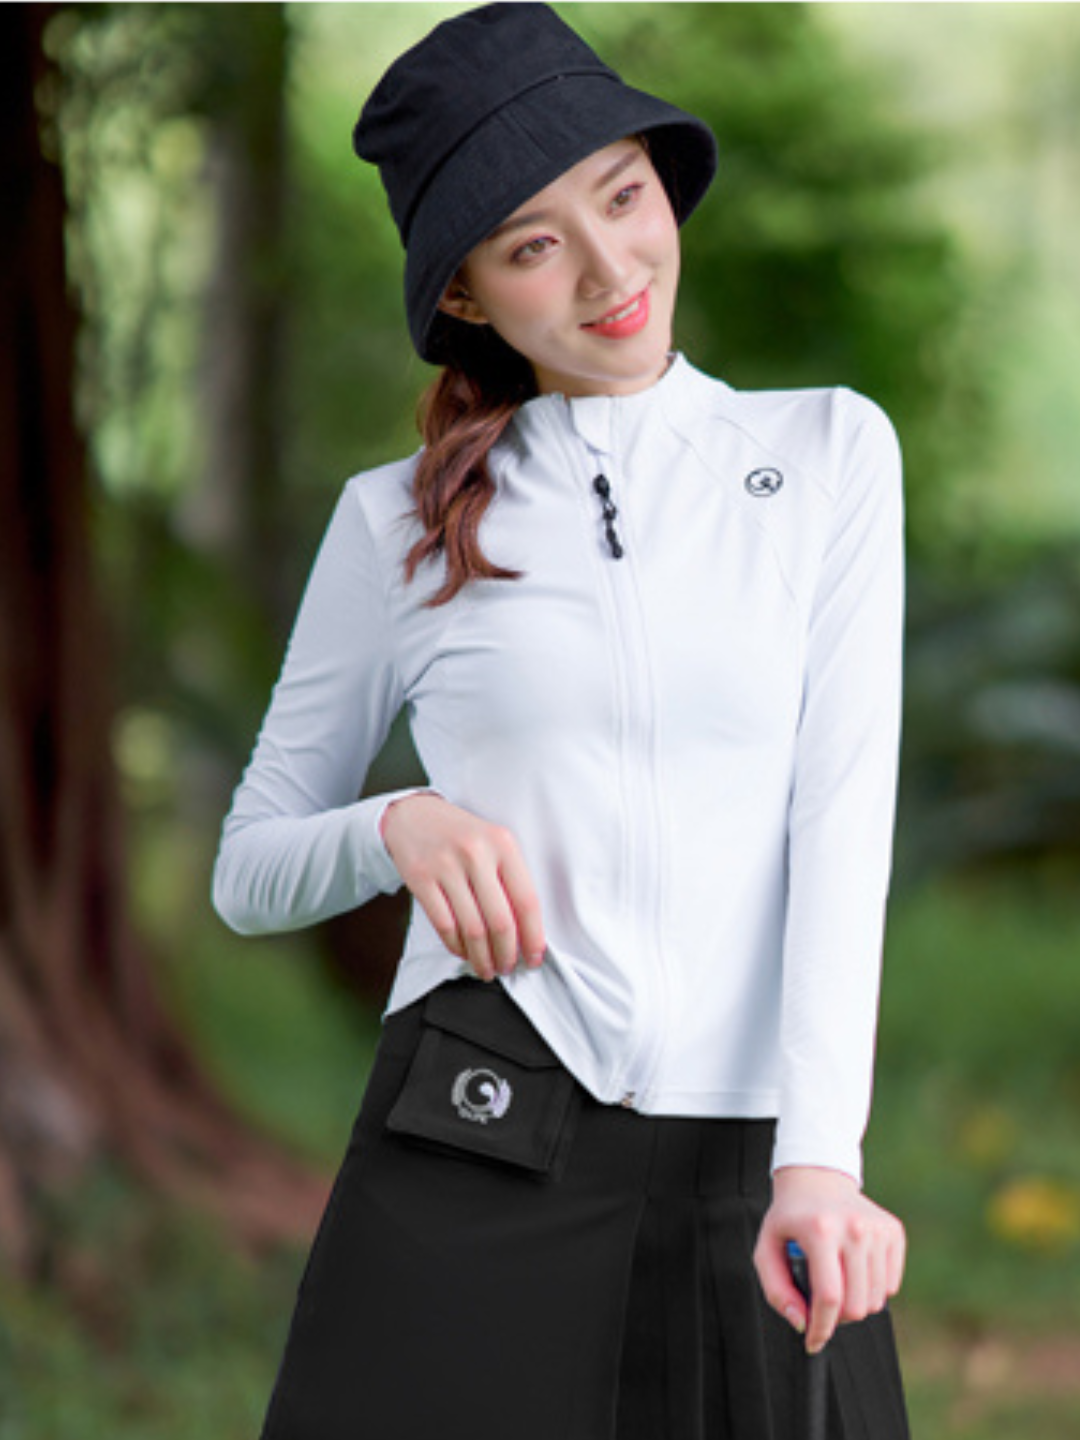 Golf wear white long sleeve jacket & short skirt set ch225